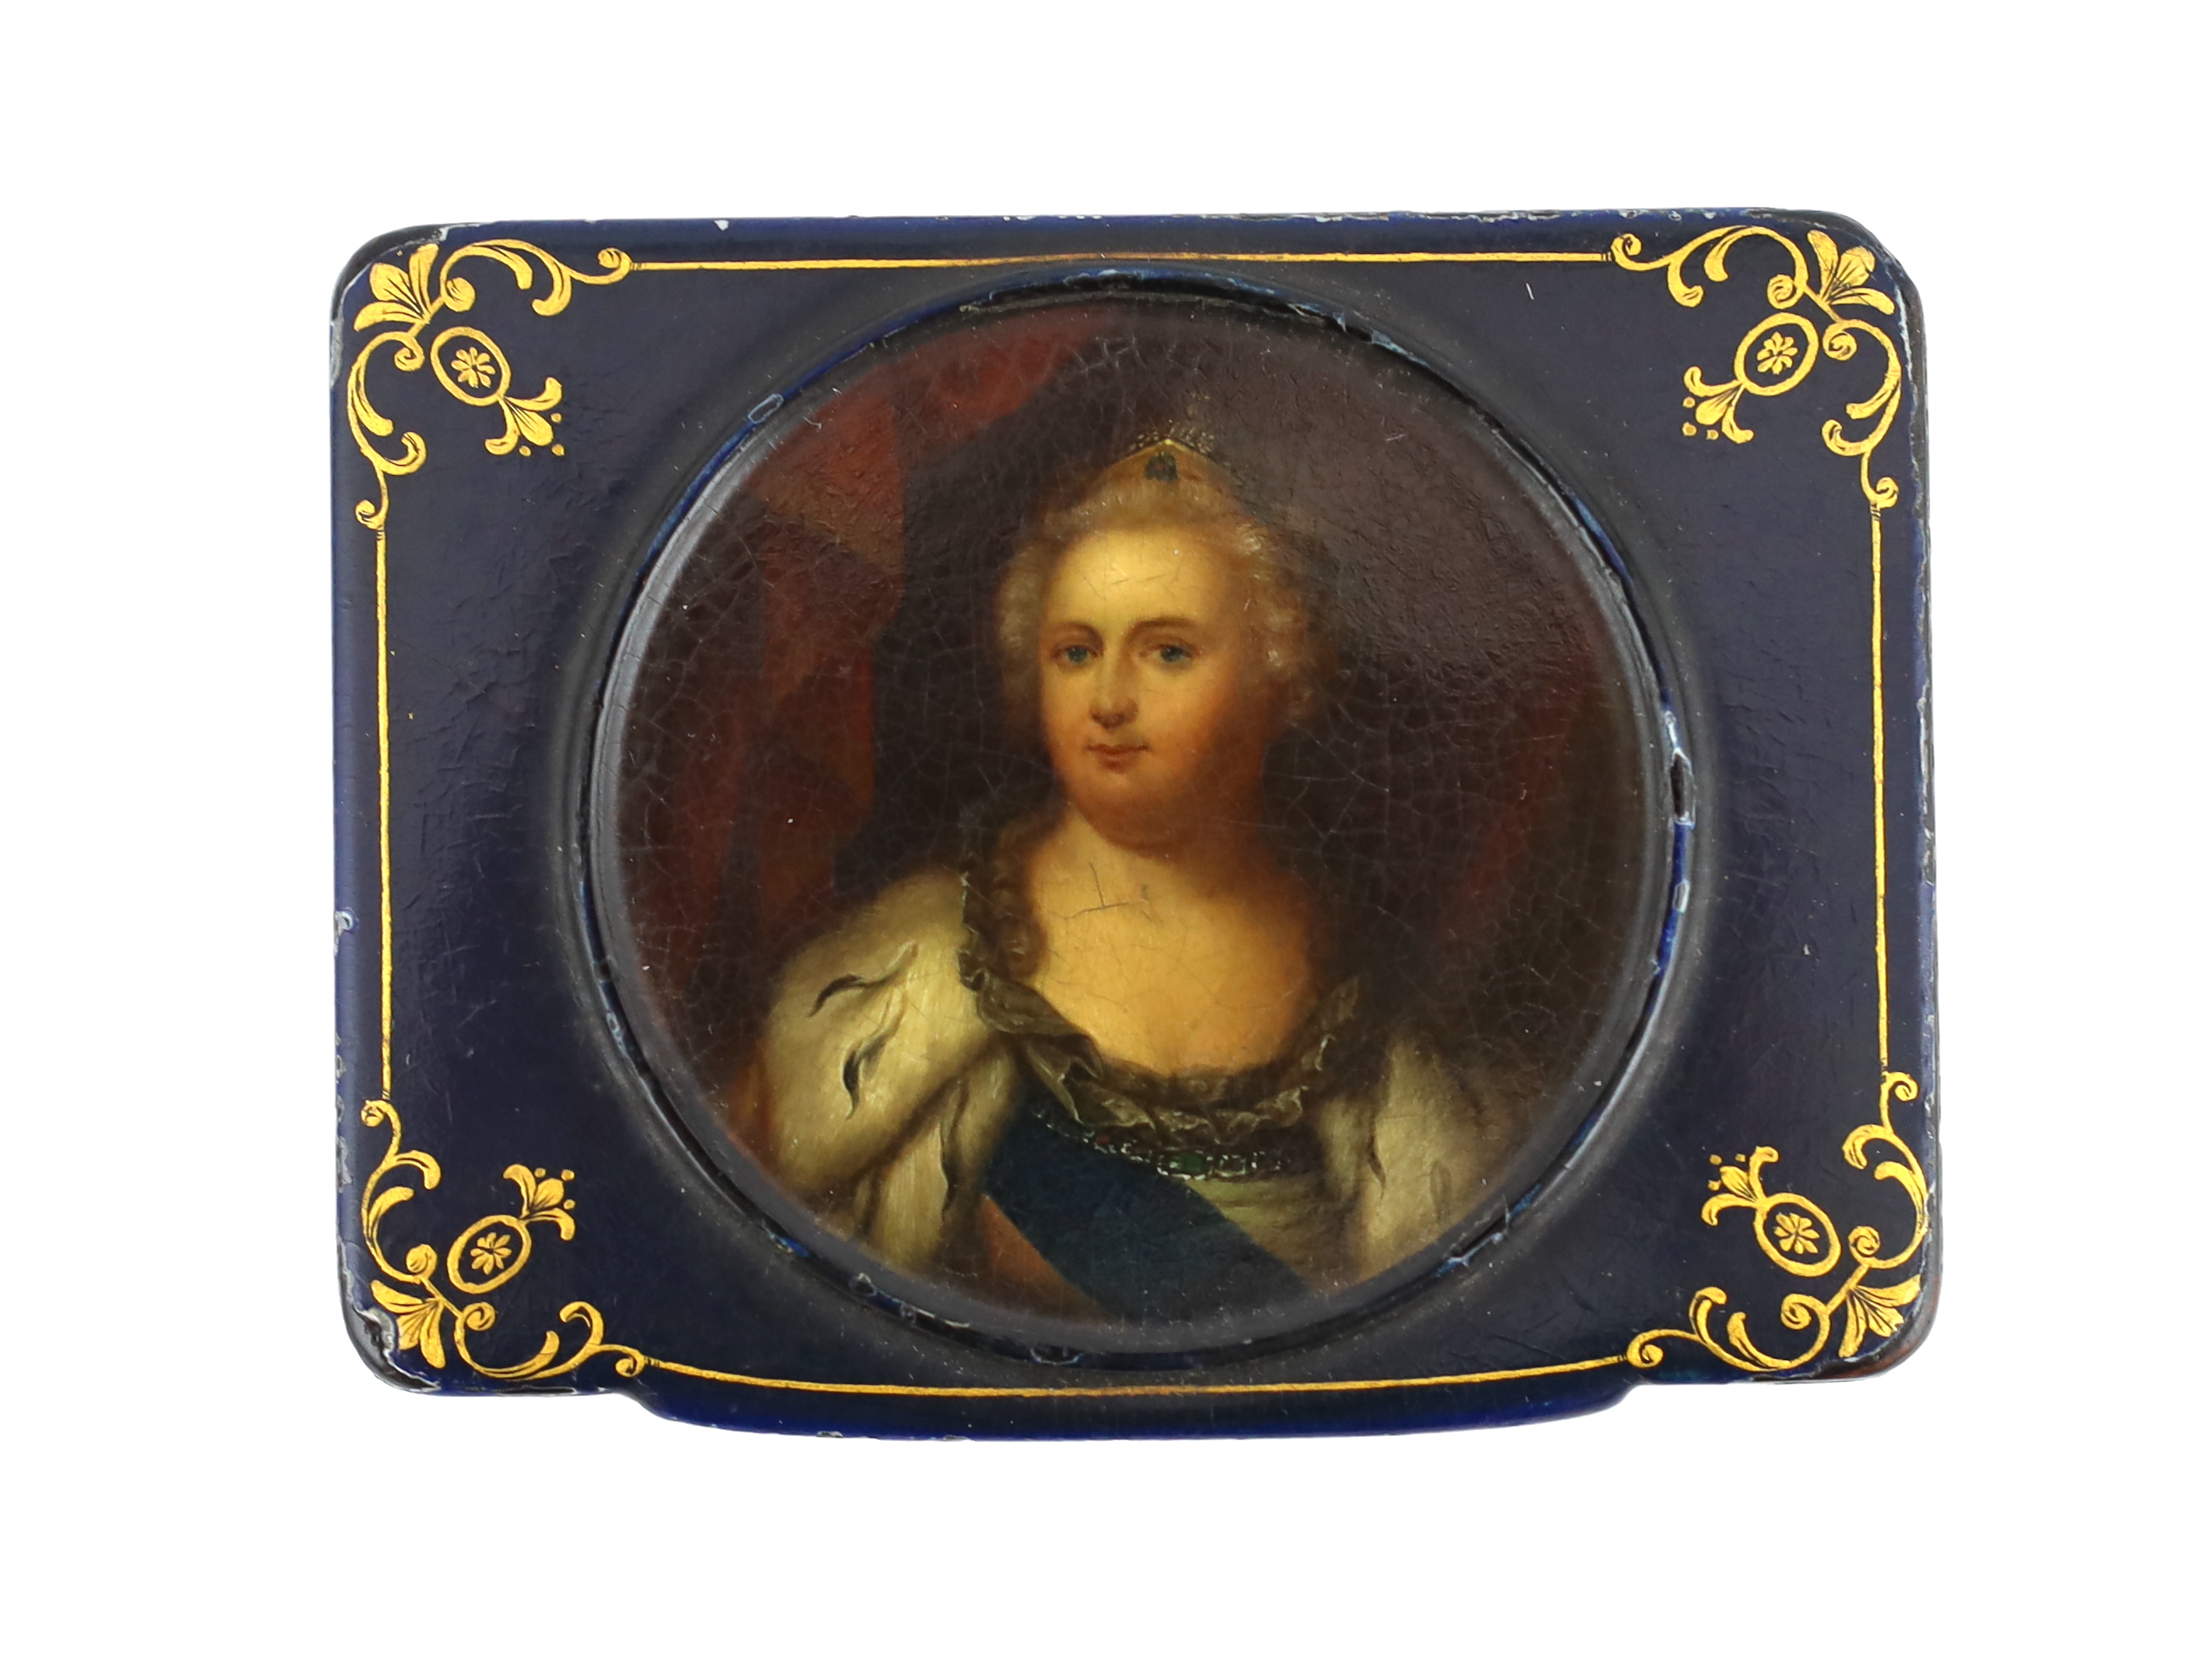 A Russian lacquer Catherine II portrait snuff box, by Lukutin, c.1840